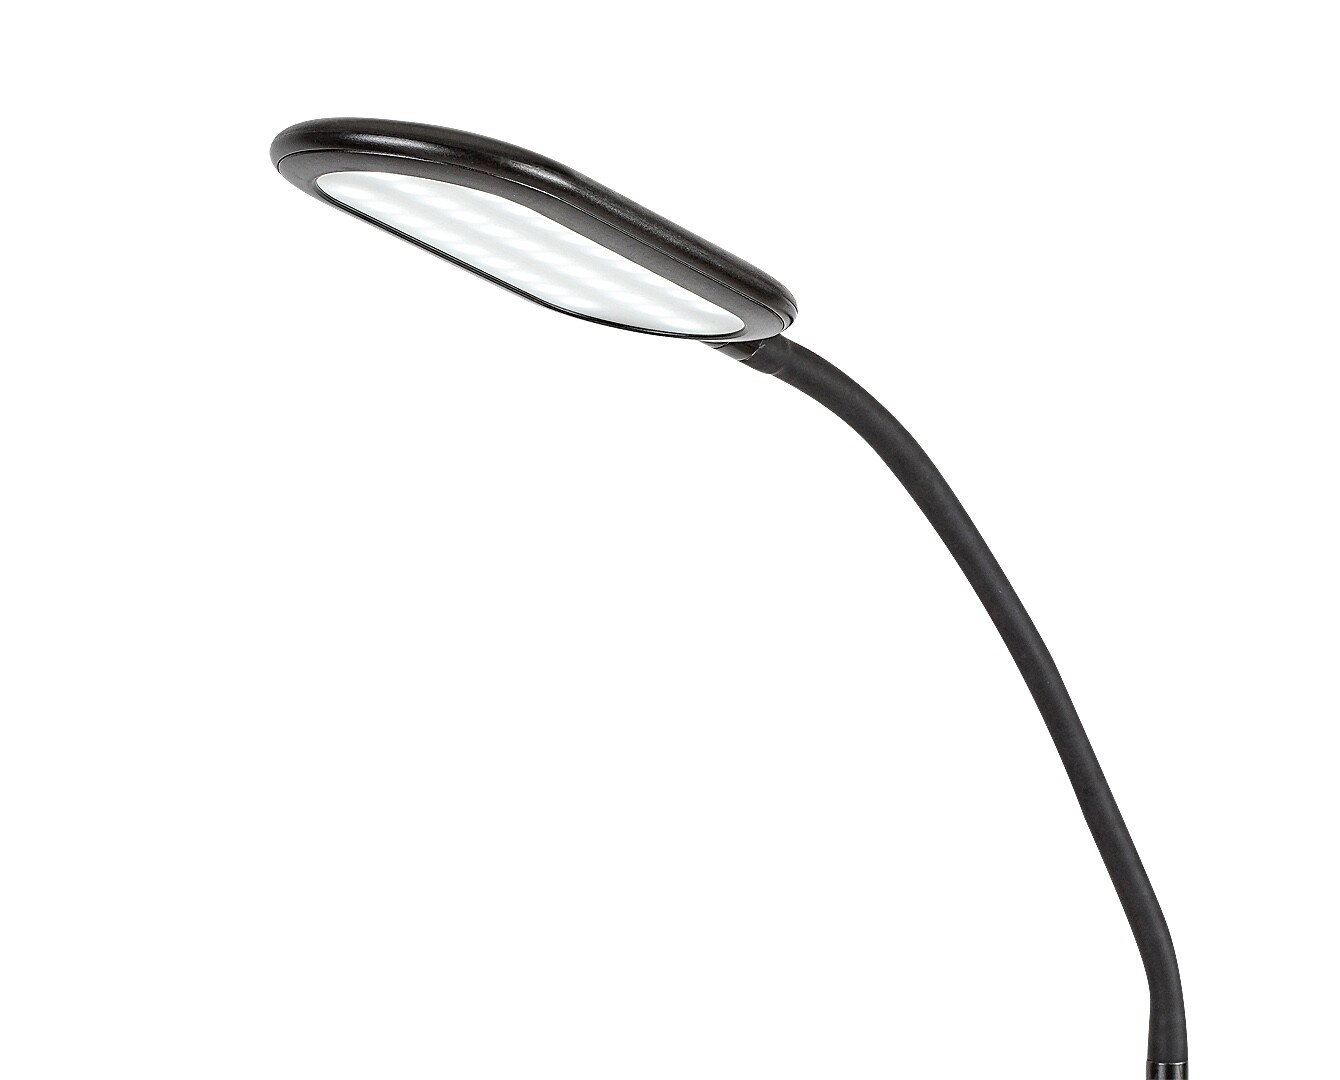 LED Stehlampe Adelmo 74009, 10W, 910lm, Metall, schwarz-weiß, Modern, dimmbar, 140cm